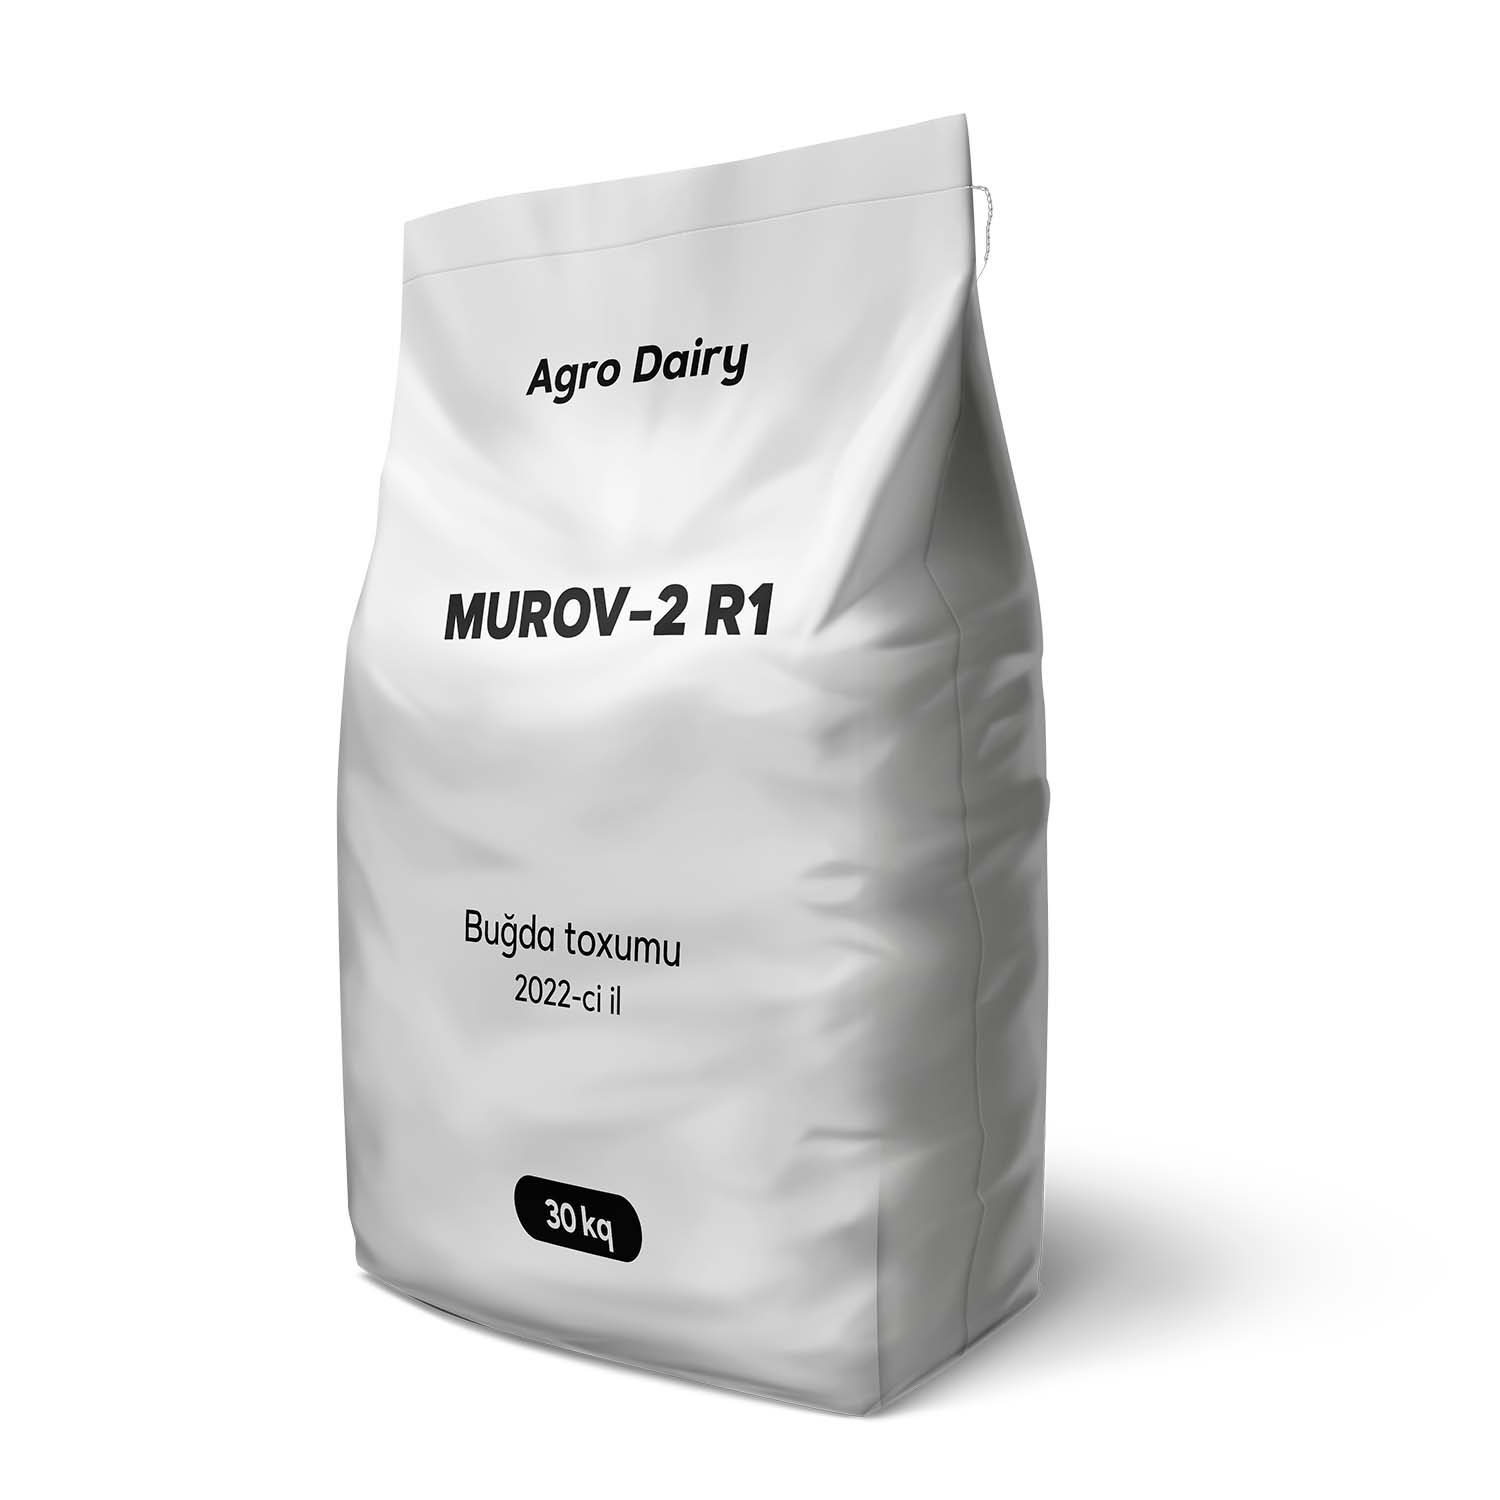 Buğda toxumu Murov-2 / R1 / Agro Dairy / 2022-ci il, 30 kq, kq